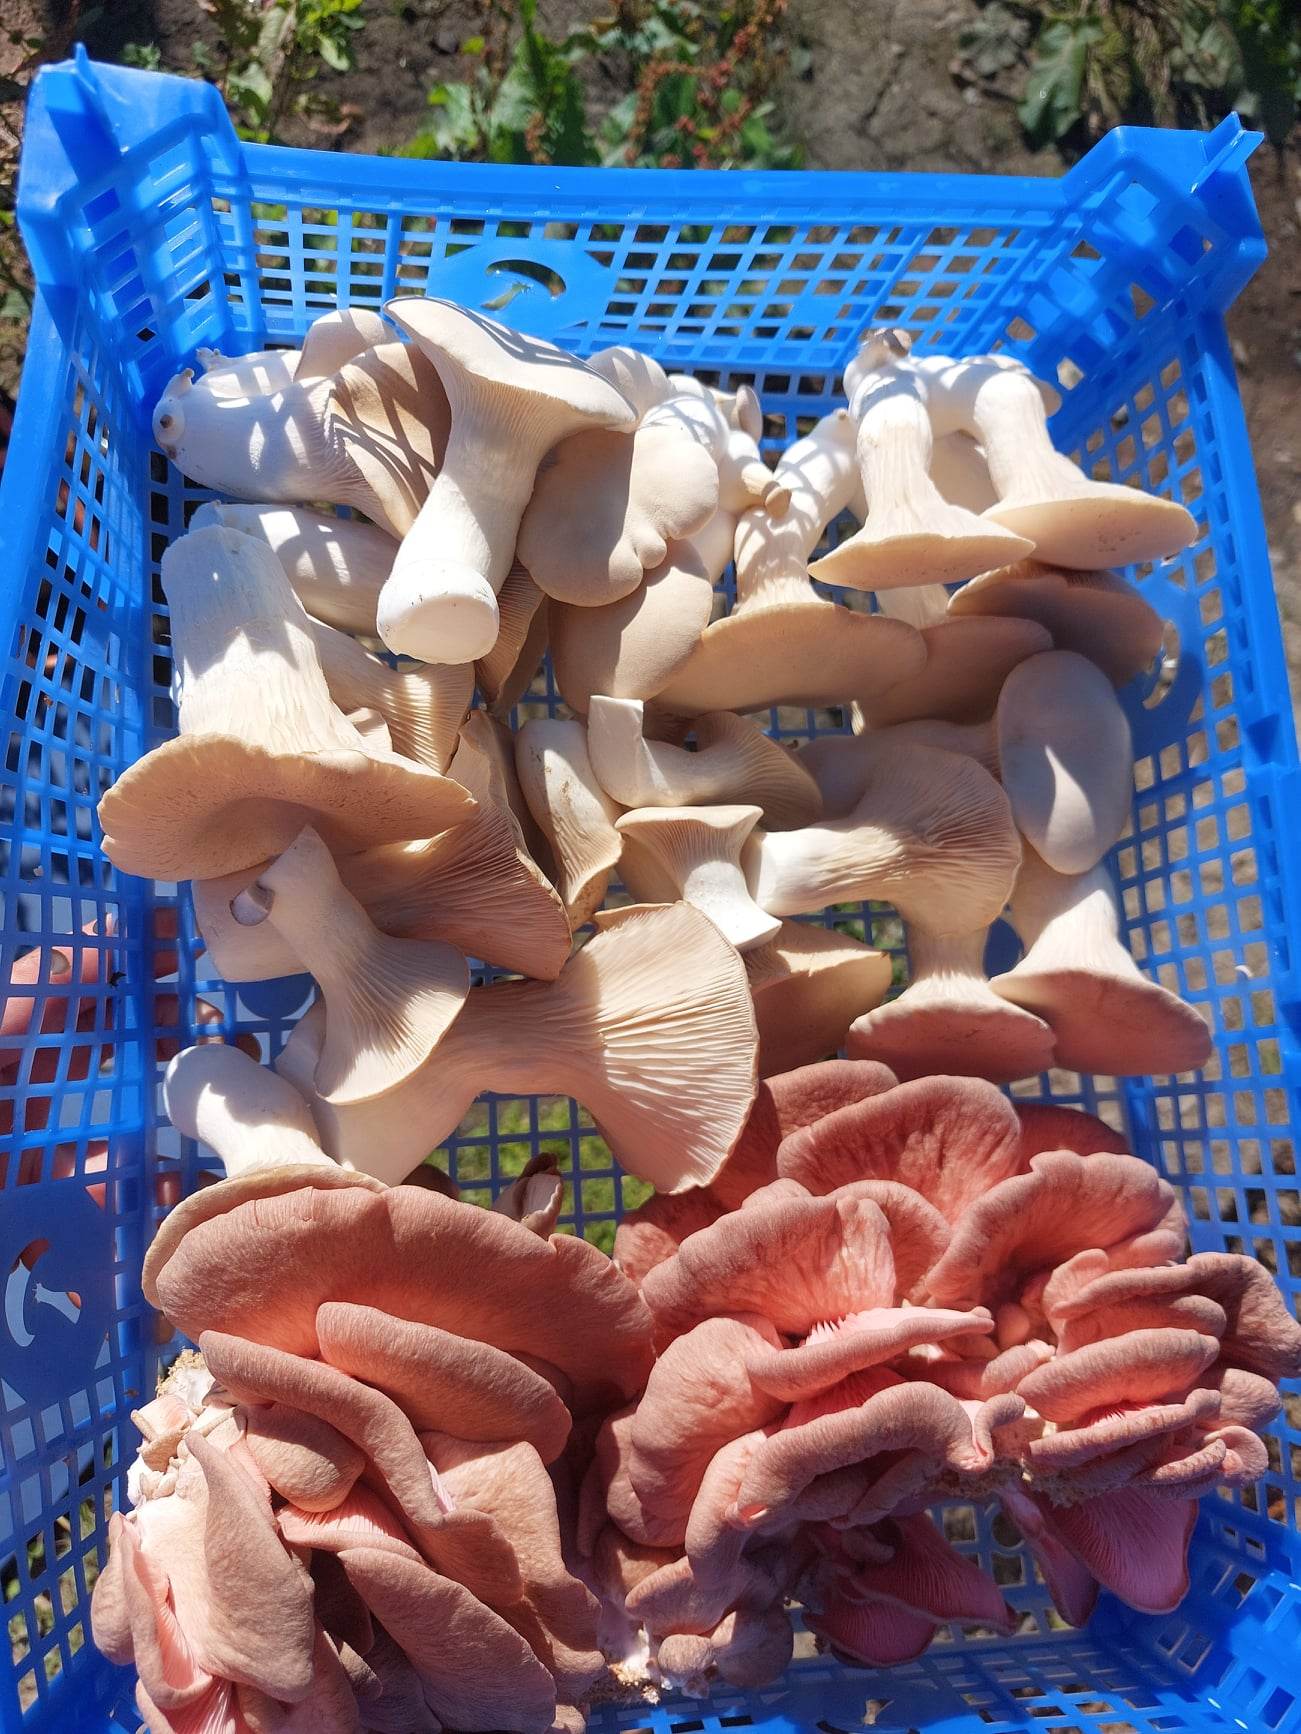 Moreish Mushrooms: Supplements, Tinctures & Grow Kits | Cornwall, UK